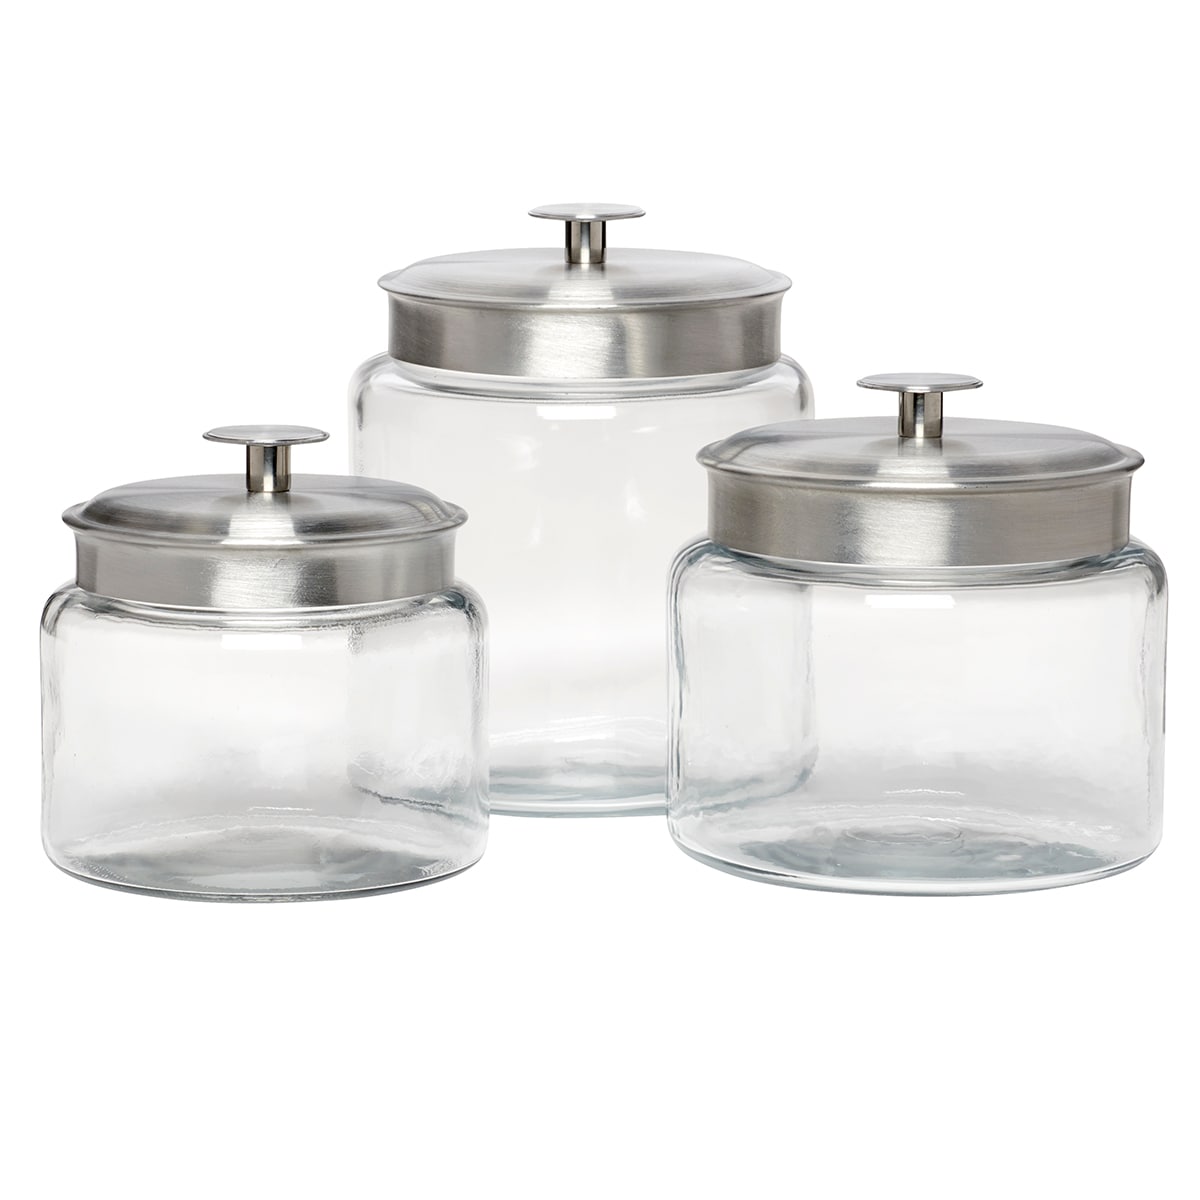 Large 1.5Gallon Glass Storage Jar, Airtight Glass Cookie Jar with